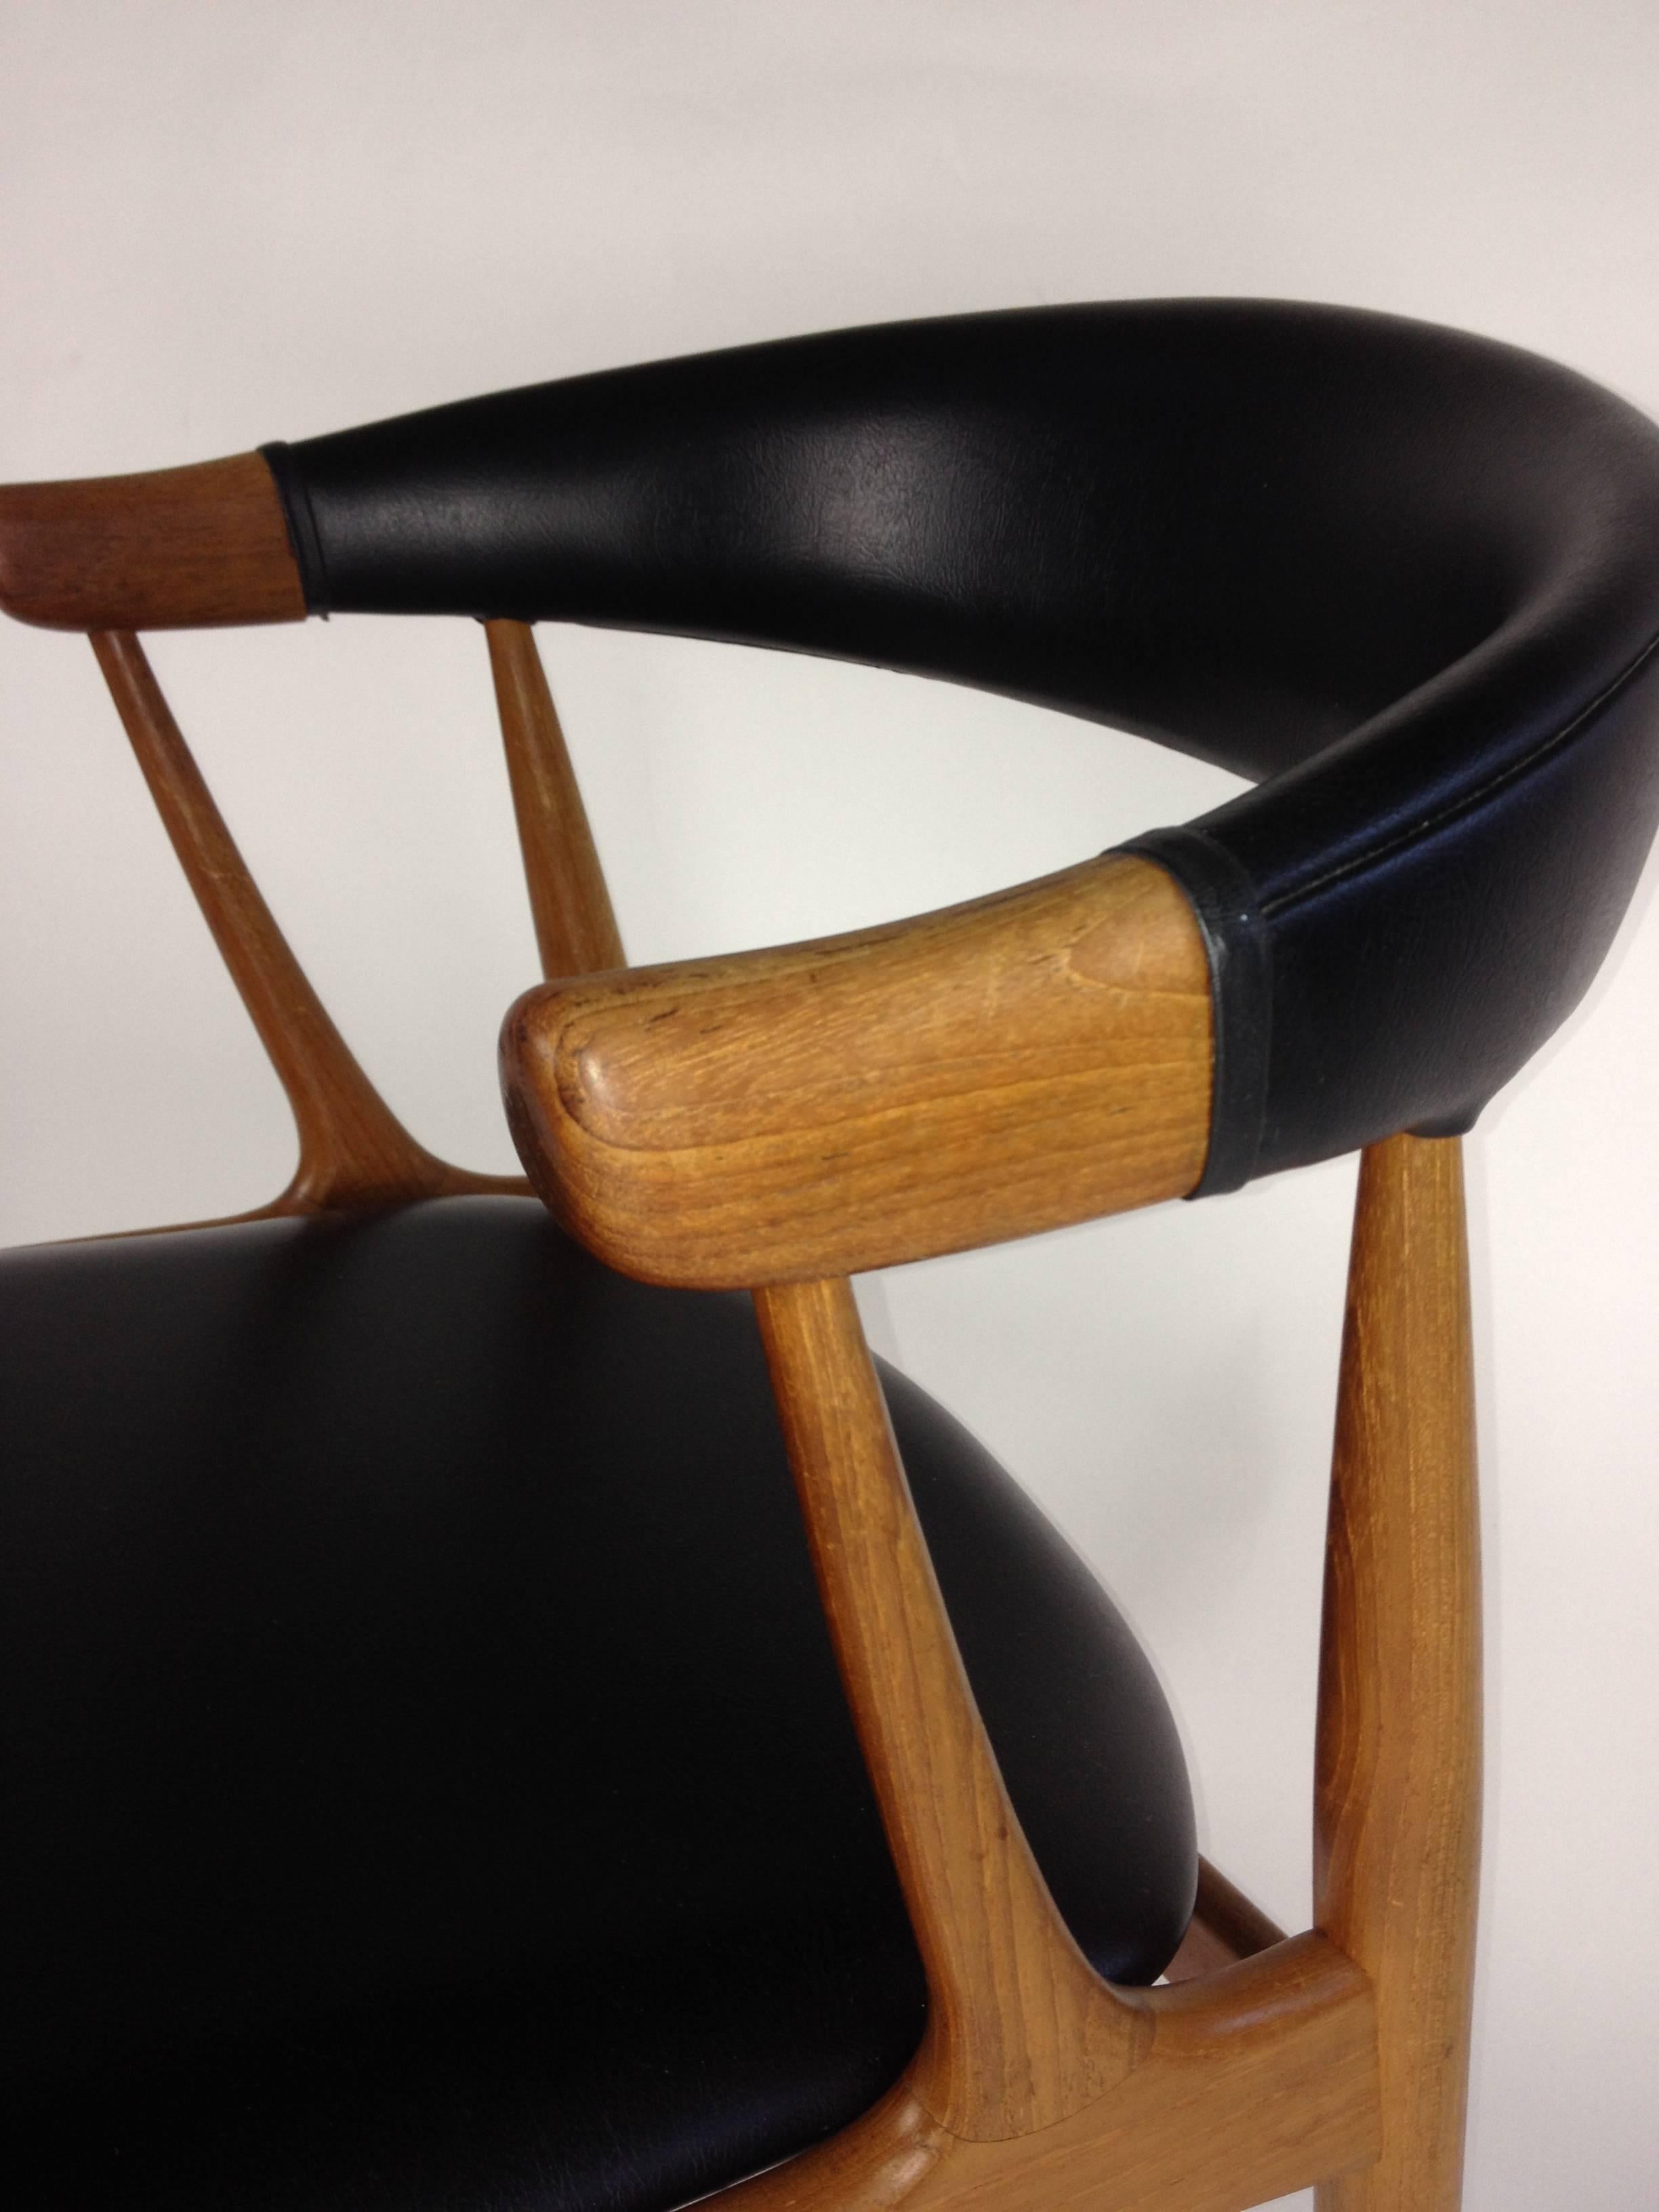 Striking Mid-Century Modern Teak Chair Designed by Johannes Andersen - Denmark In Good Condition For Sale In Victoria, British Columbia